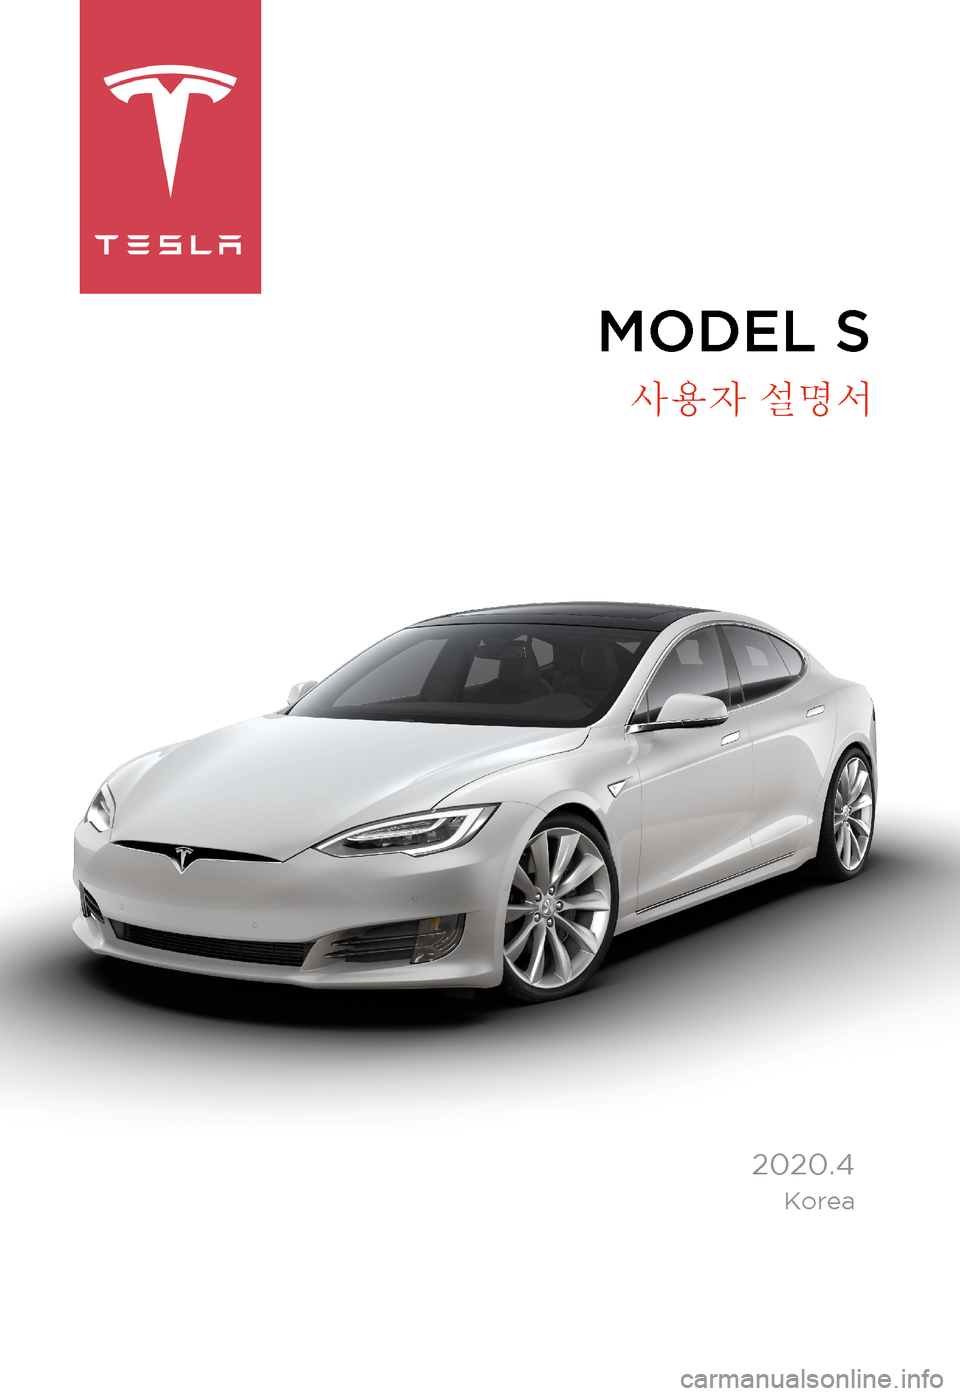 TESLA MODEL S 2020  사용자 가이드 (in Korean) MODEL S

사용자 설명서
  2020.4
  Korea 